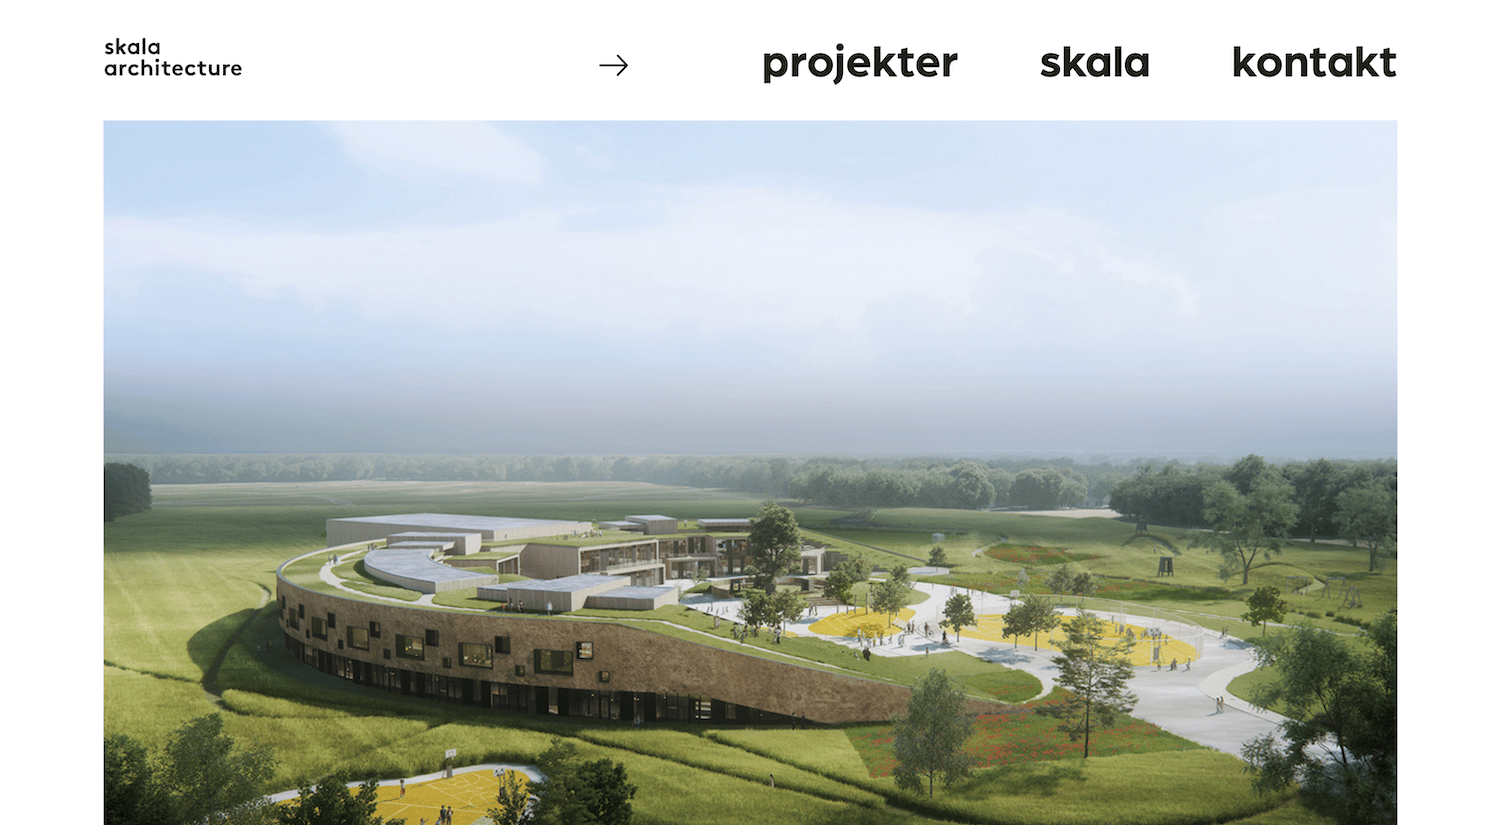 Skala architecture website